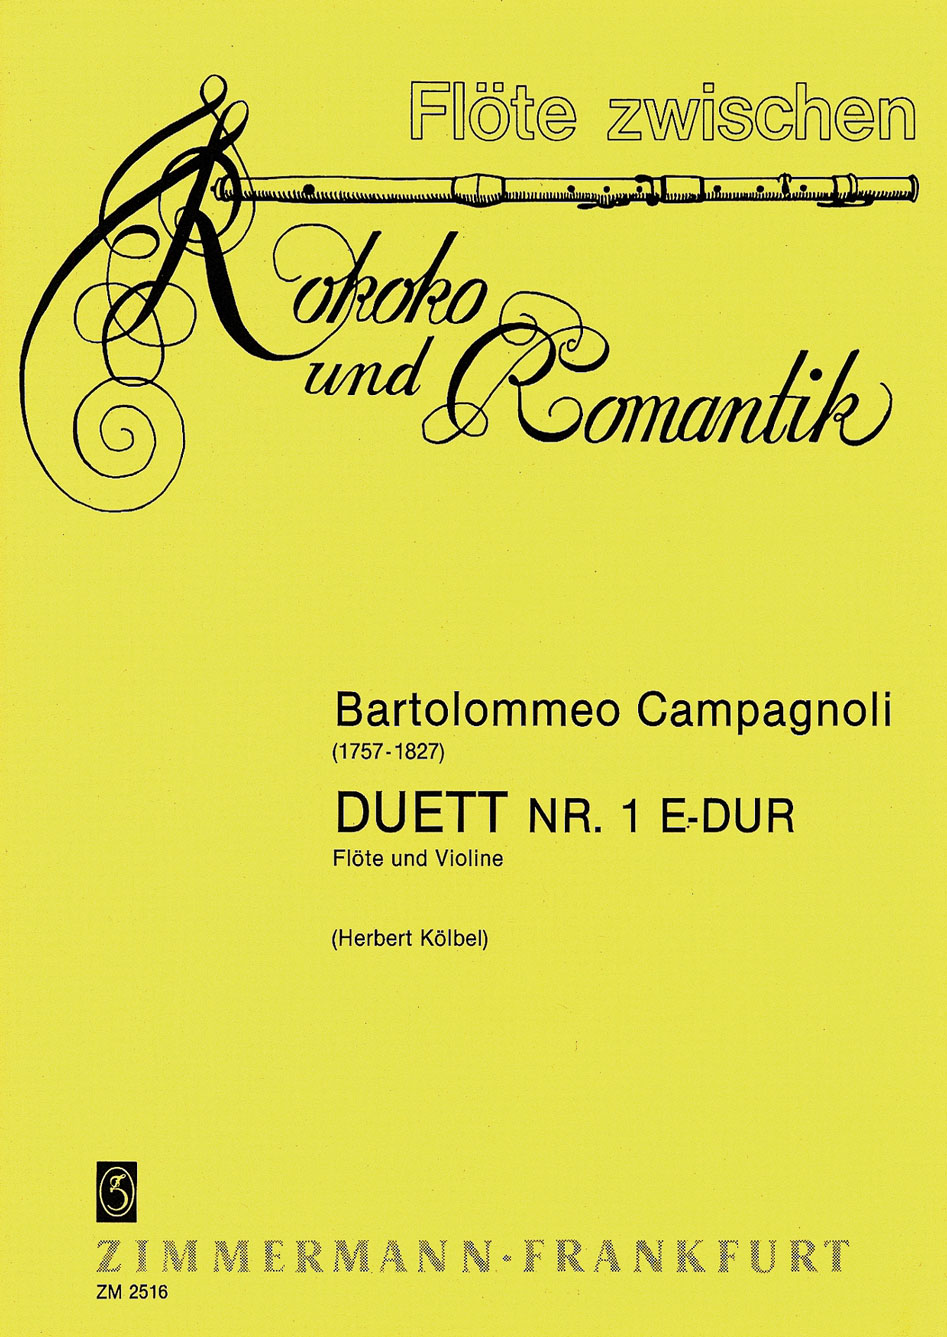 Bartolomeo-Campagnoli-Duett-No-1-E-Dur-Fl-Vl-_0001.JPG